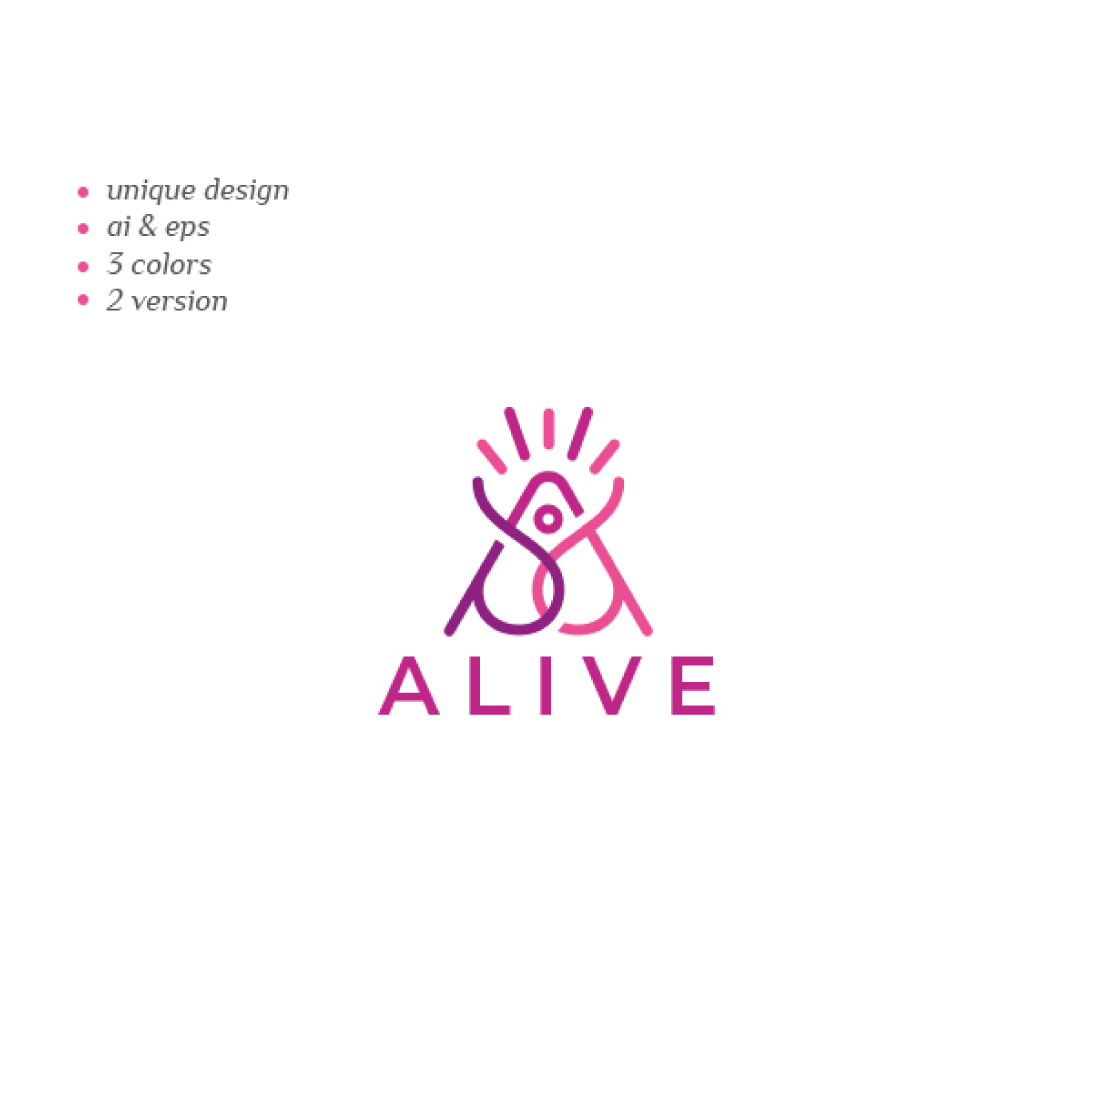 Alive yoga Logo cover image.